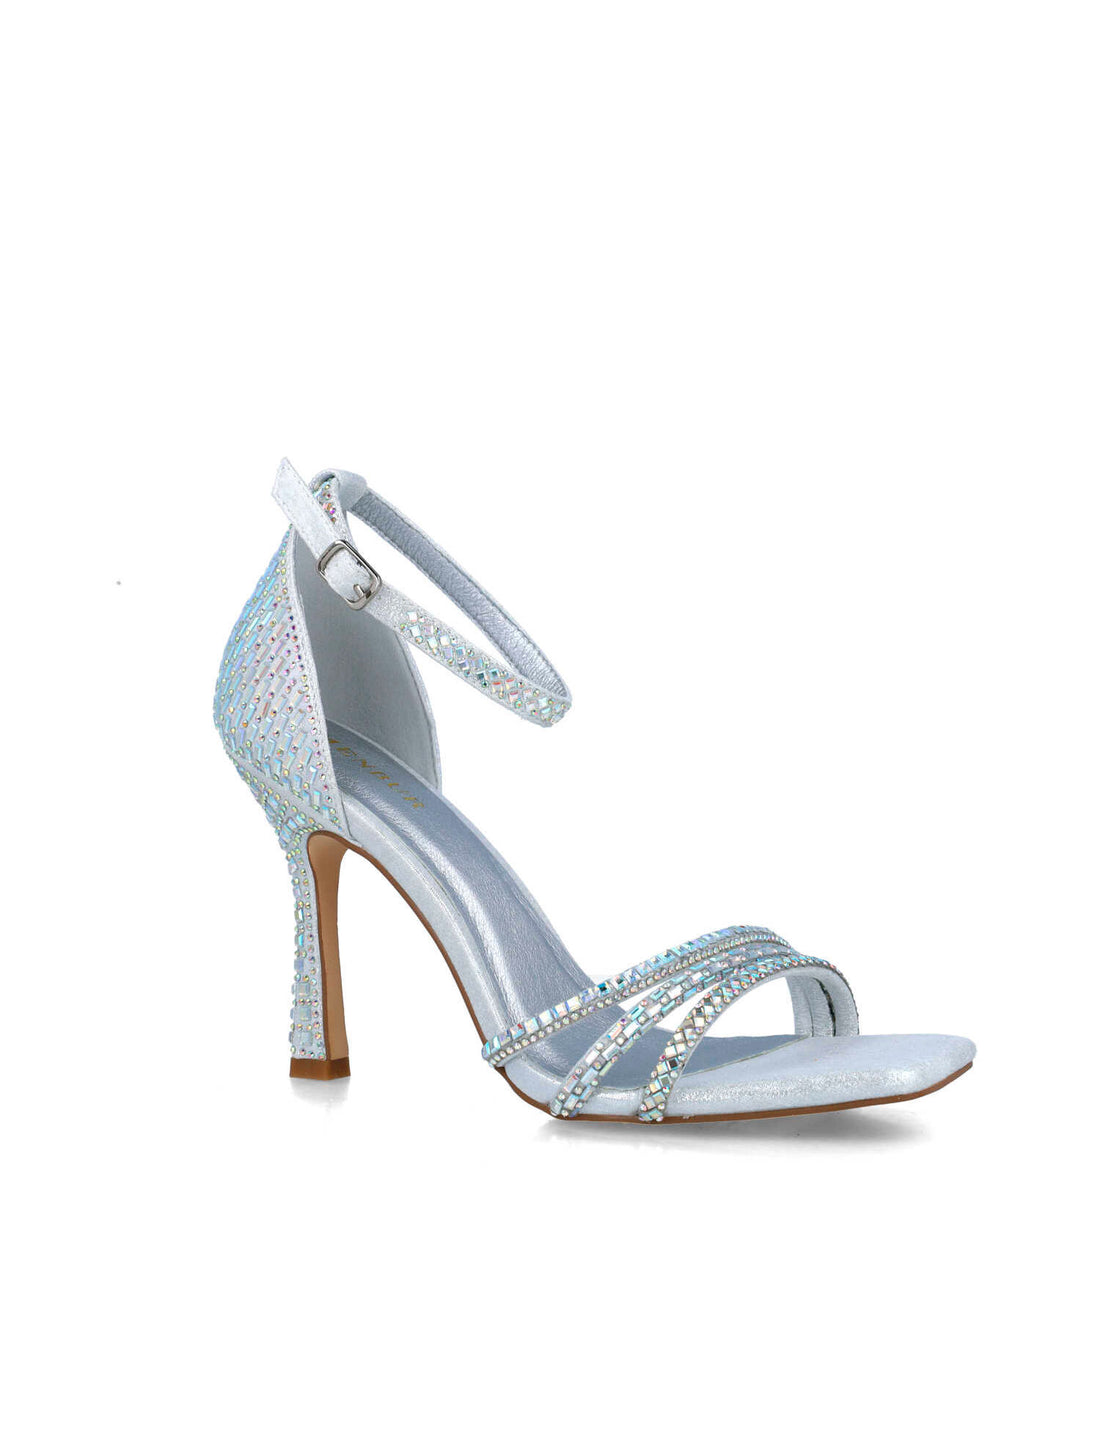 Silver Embellishd High-Heel Sandals_24736_09_02